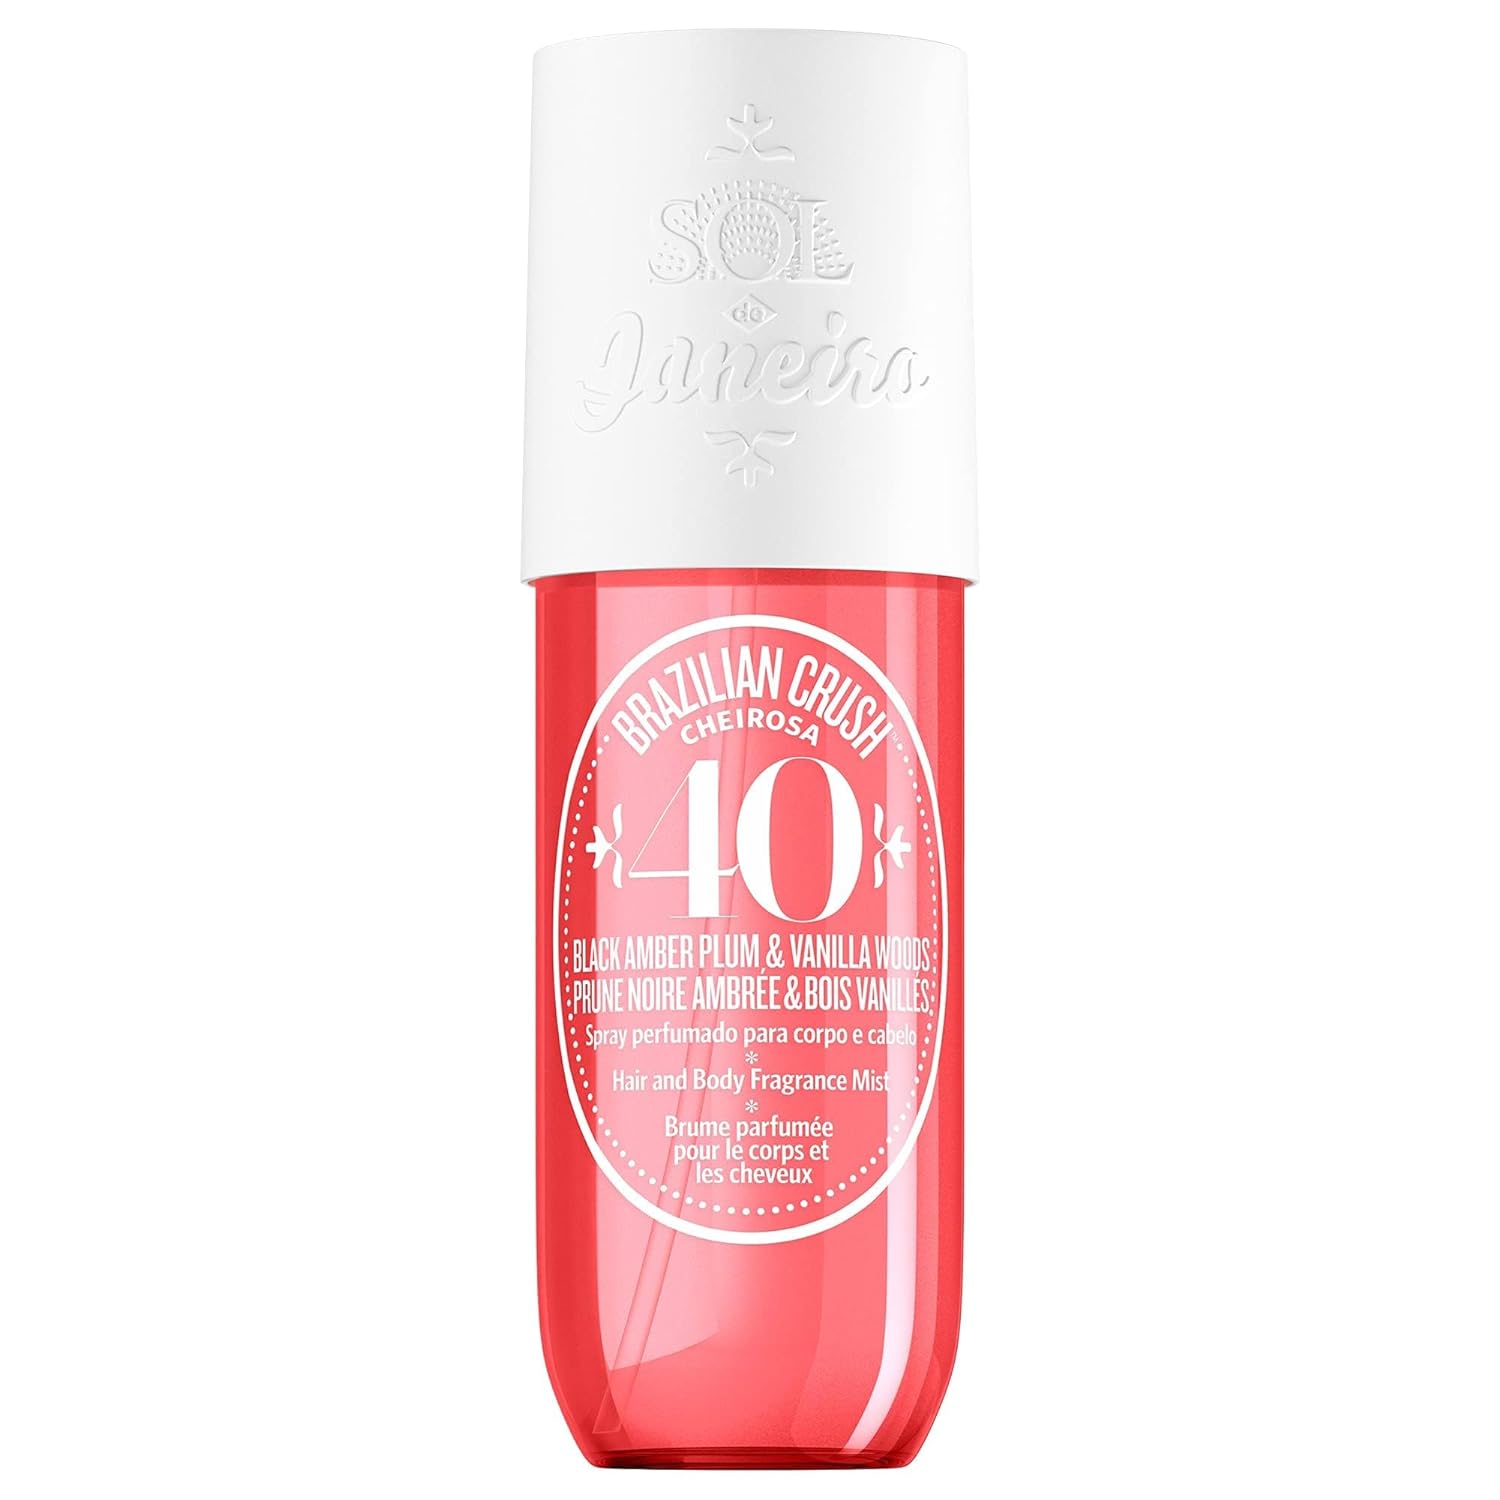 SOL DE JANEIRO Cheirosa '40 Hair & Body Fragrance Mist 240mL/8.1 fl oz